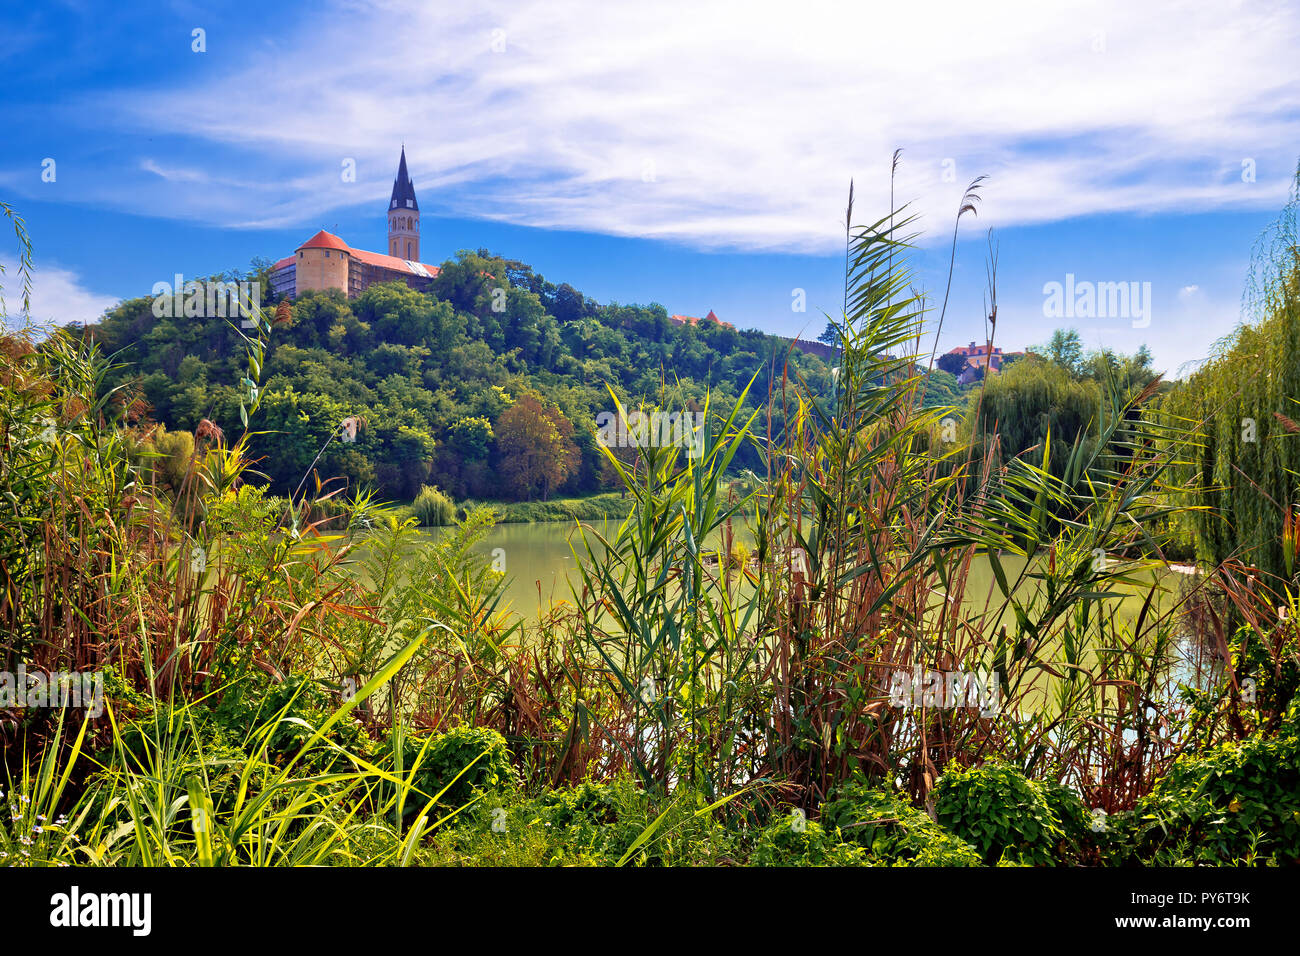 Town of Ilok church on the hill above lake, Slavonija region of Croatia Stock Photo